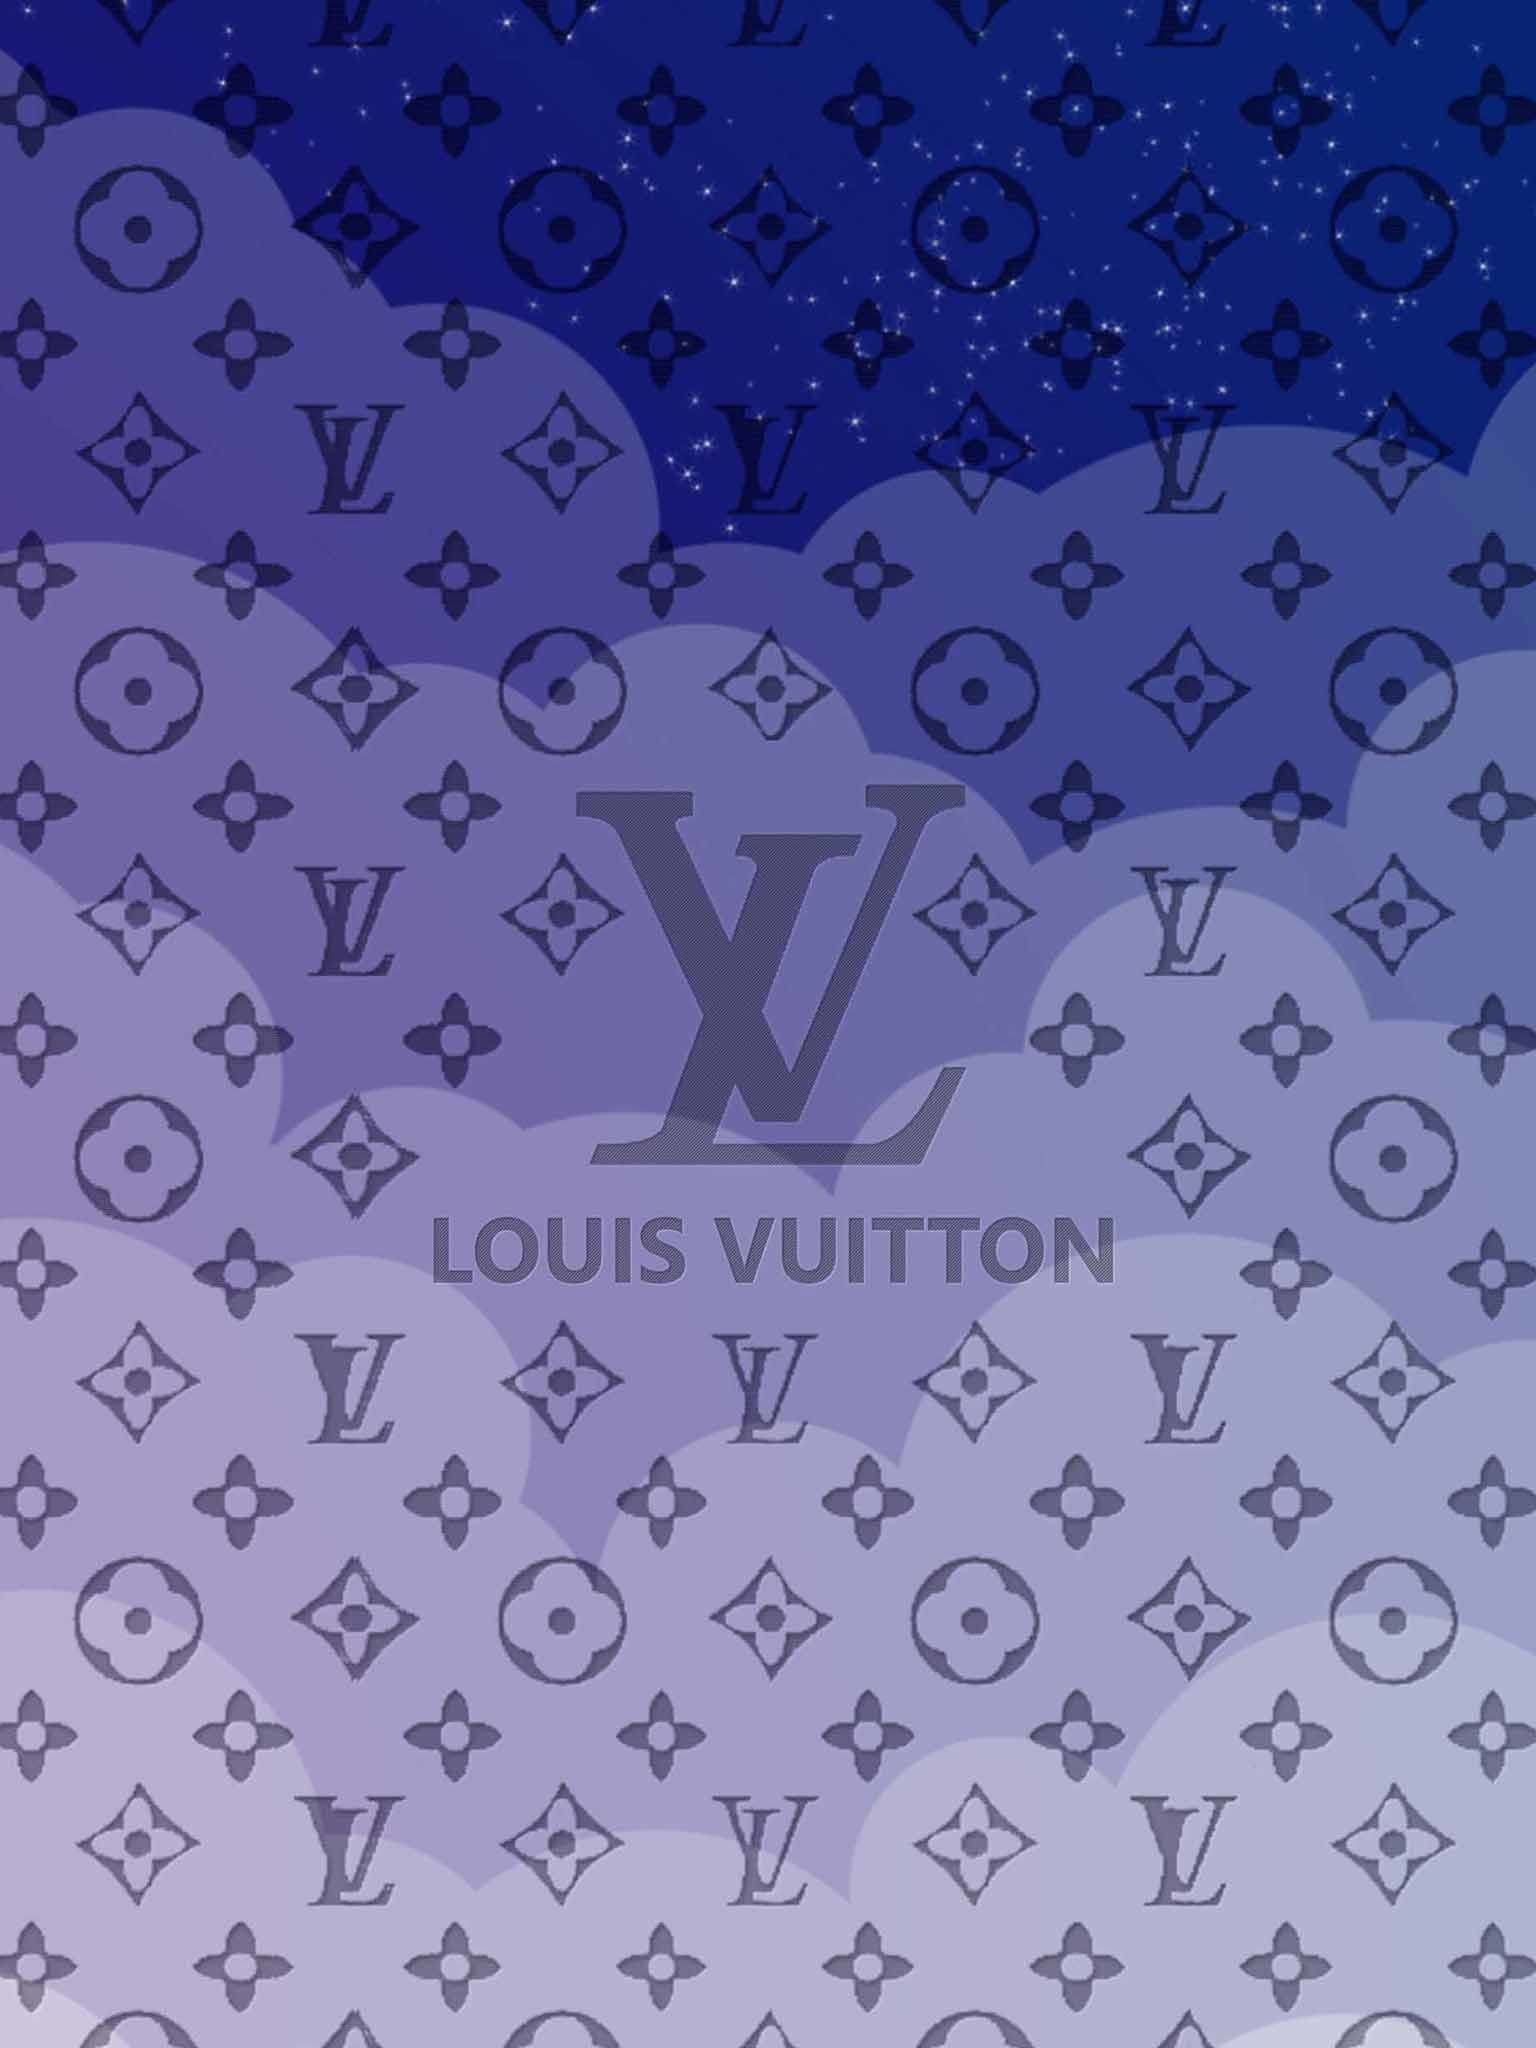 Louis Vuitton Wallpaper 2020